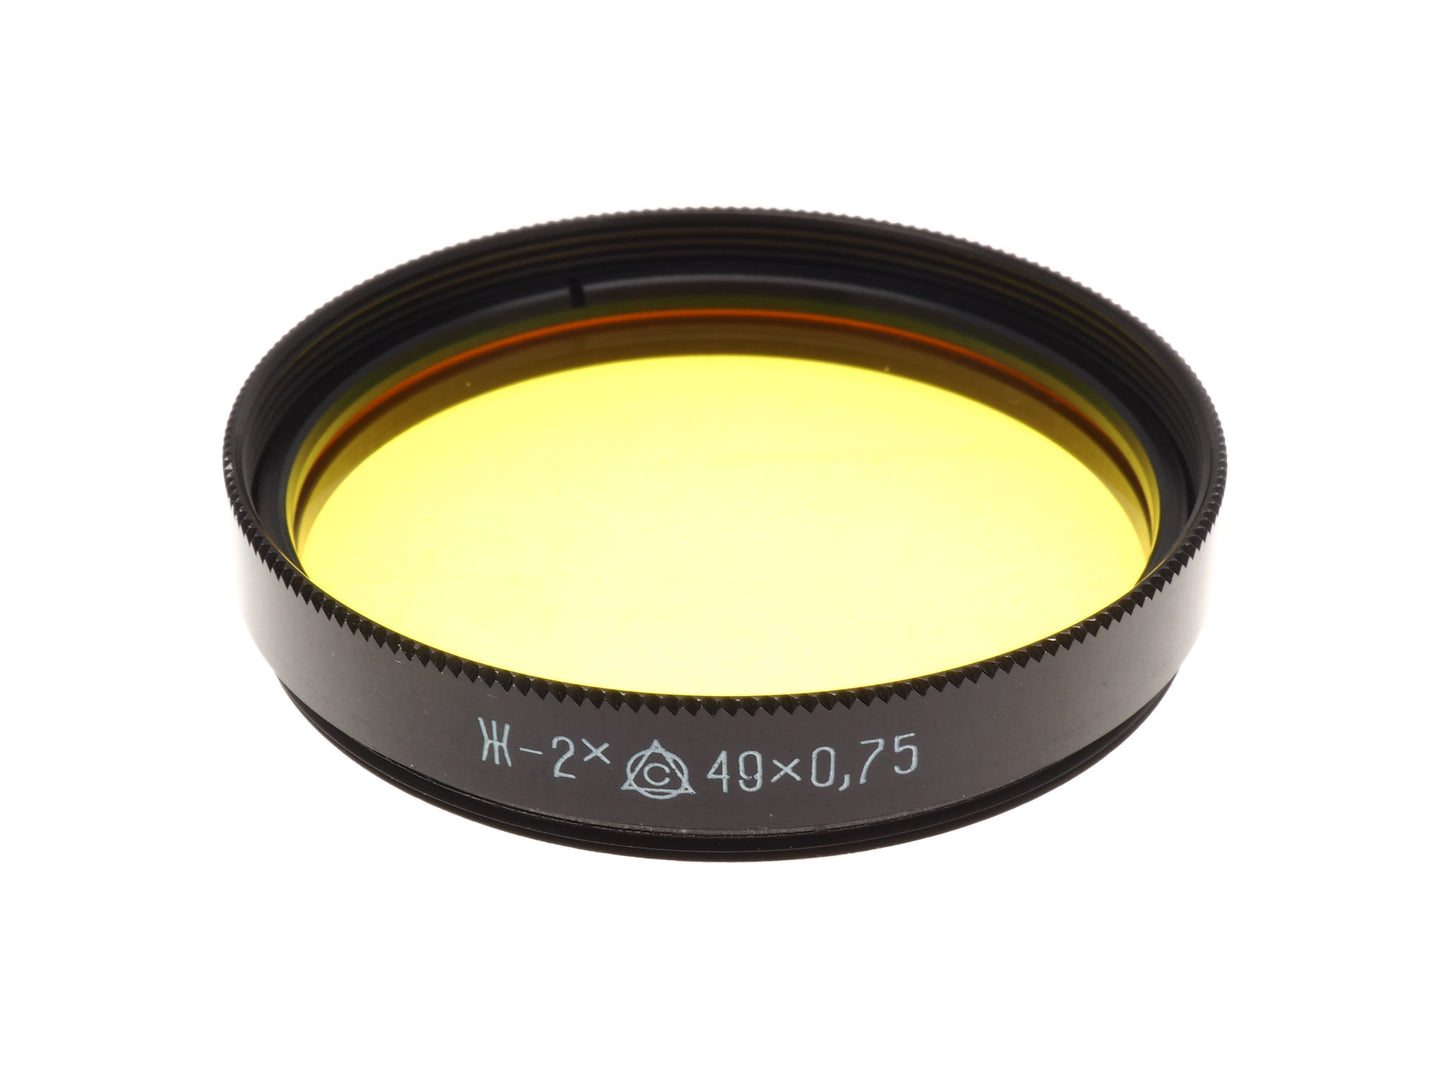 LZOS 49mm Yellow Filter 2x Ж - Accessory